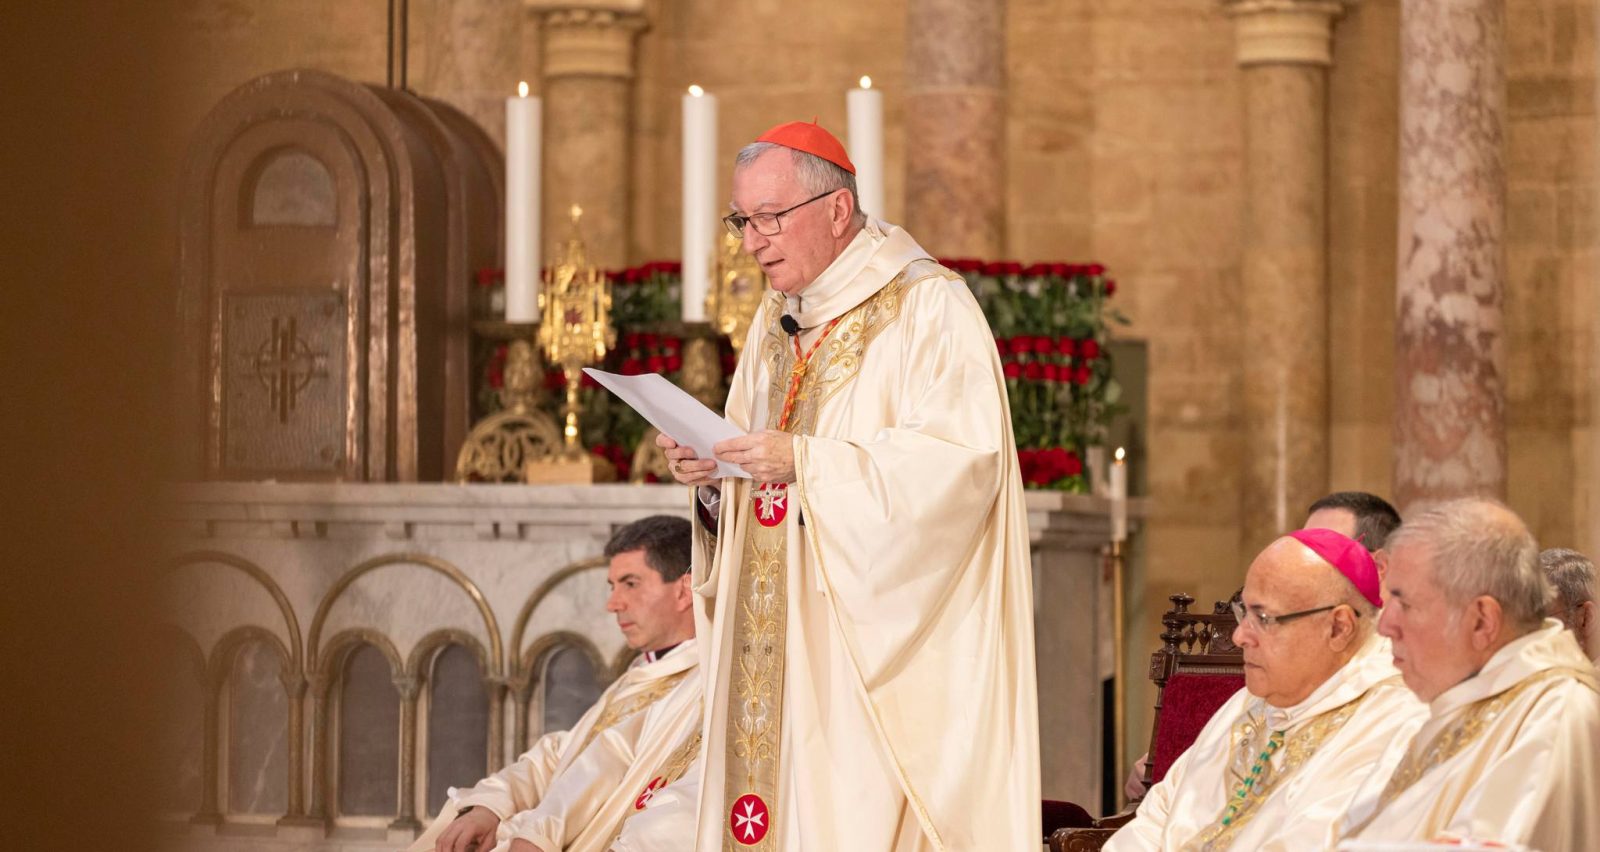 Cardinal Parolin visits Order of Malta’s activities in Lebanon